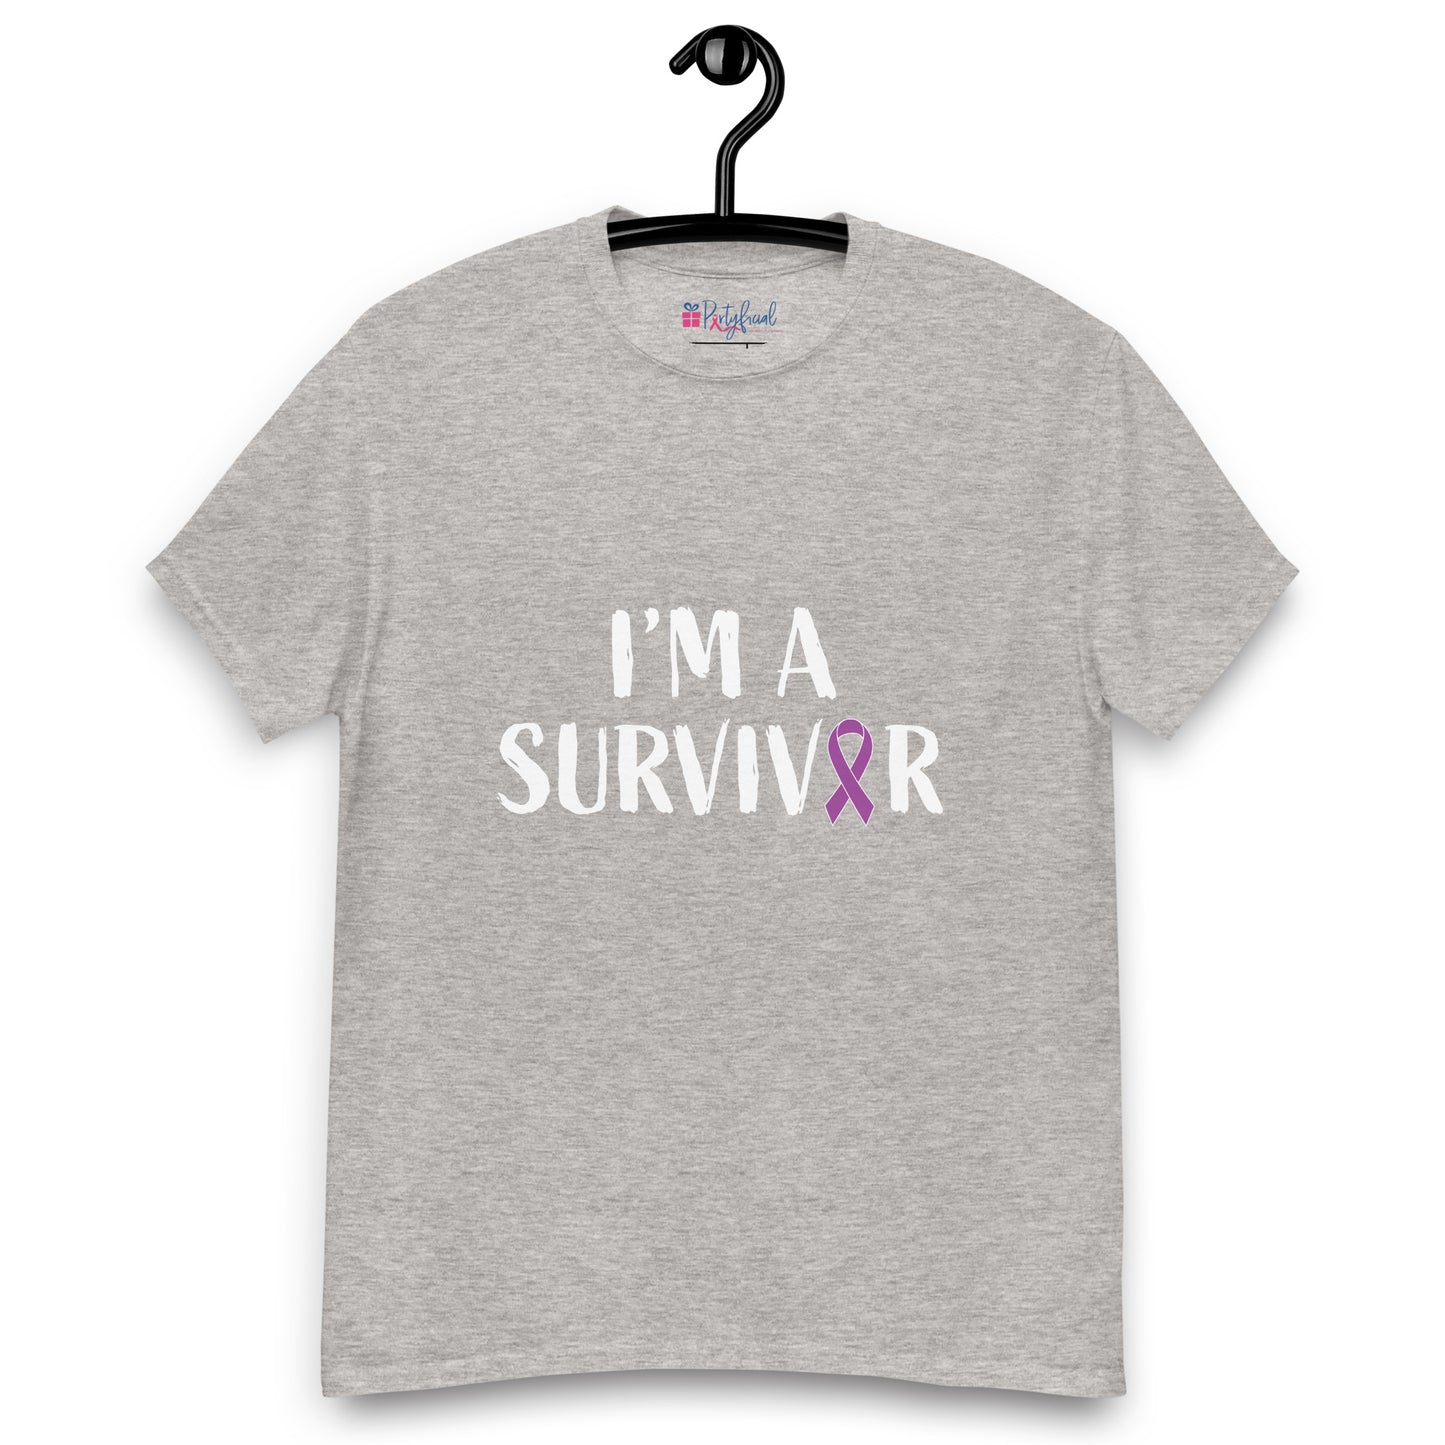 I Am a Lupus Survivor tee